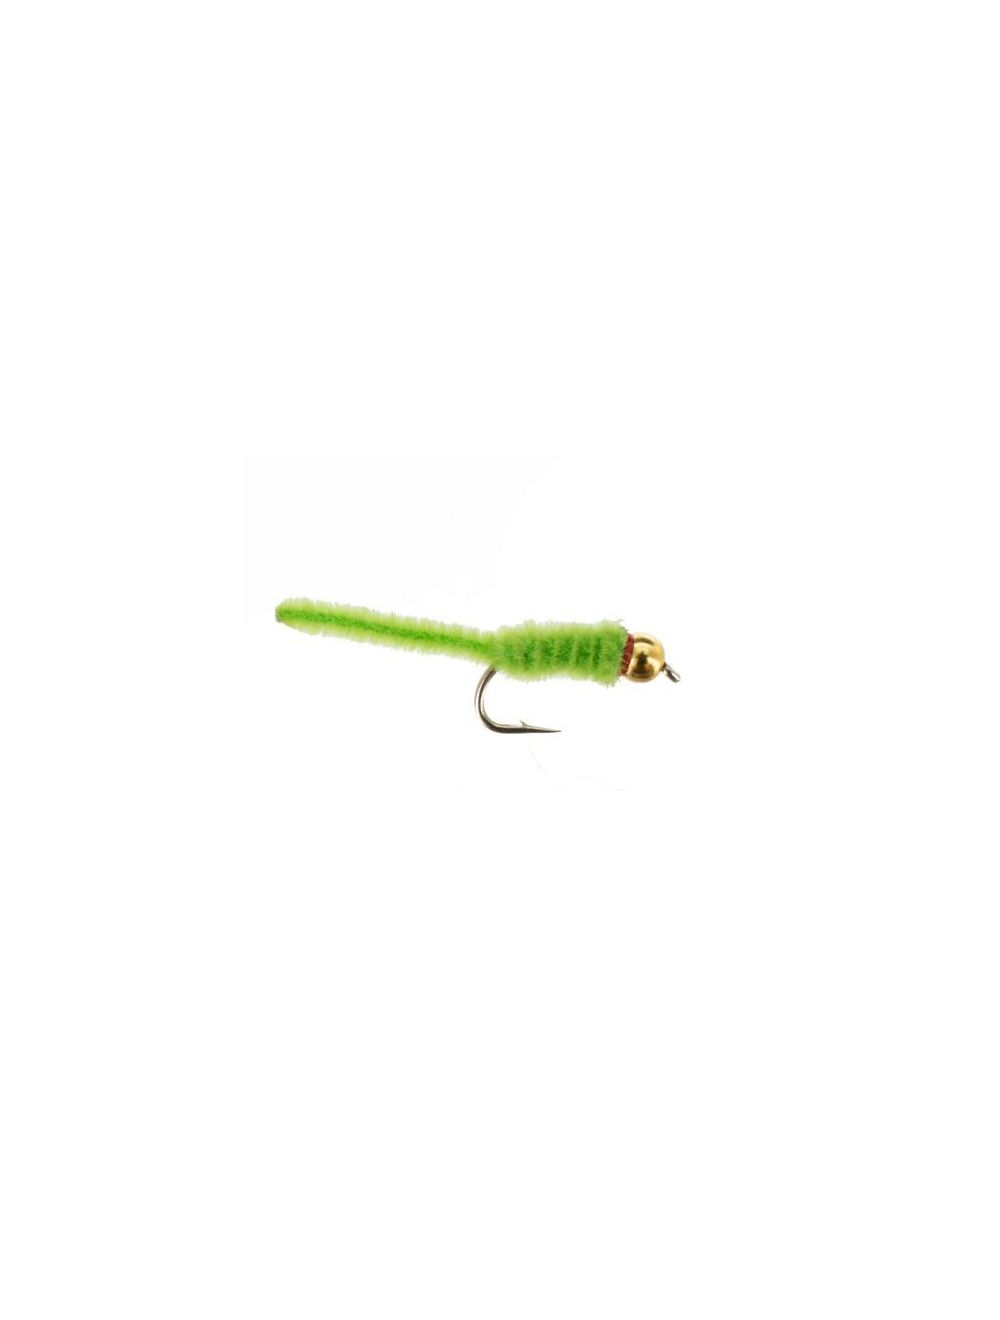 https://eadn-wc02-1020161.nxedge.io/cdn/media/catalog/product/cache/32b930e20bfef0c9badd7ee253a86131/b/e/beadhead-green-weenie-fly-fishing-flies-scuds--sow-bugs--worms_preview_1__4.jpeg